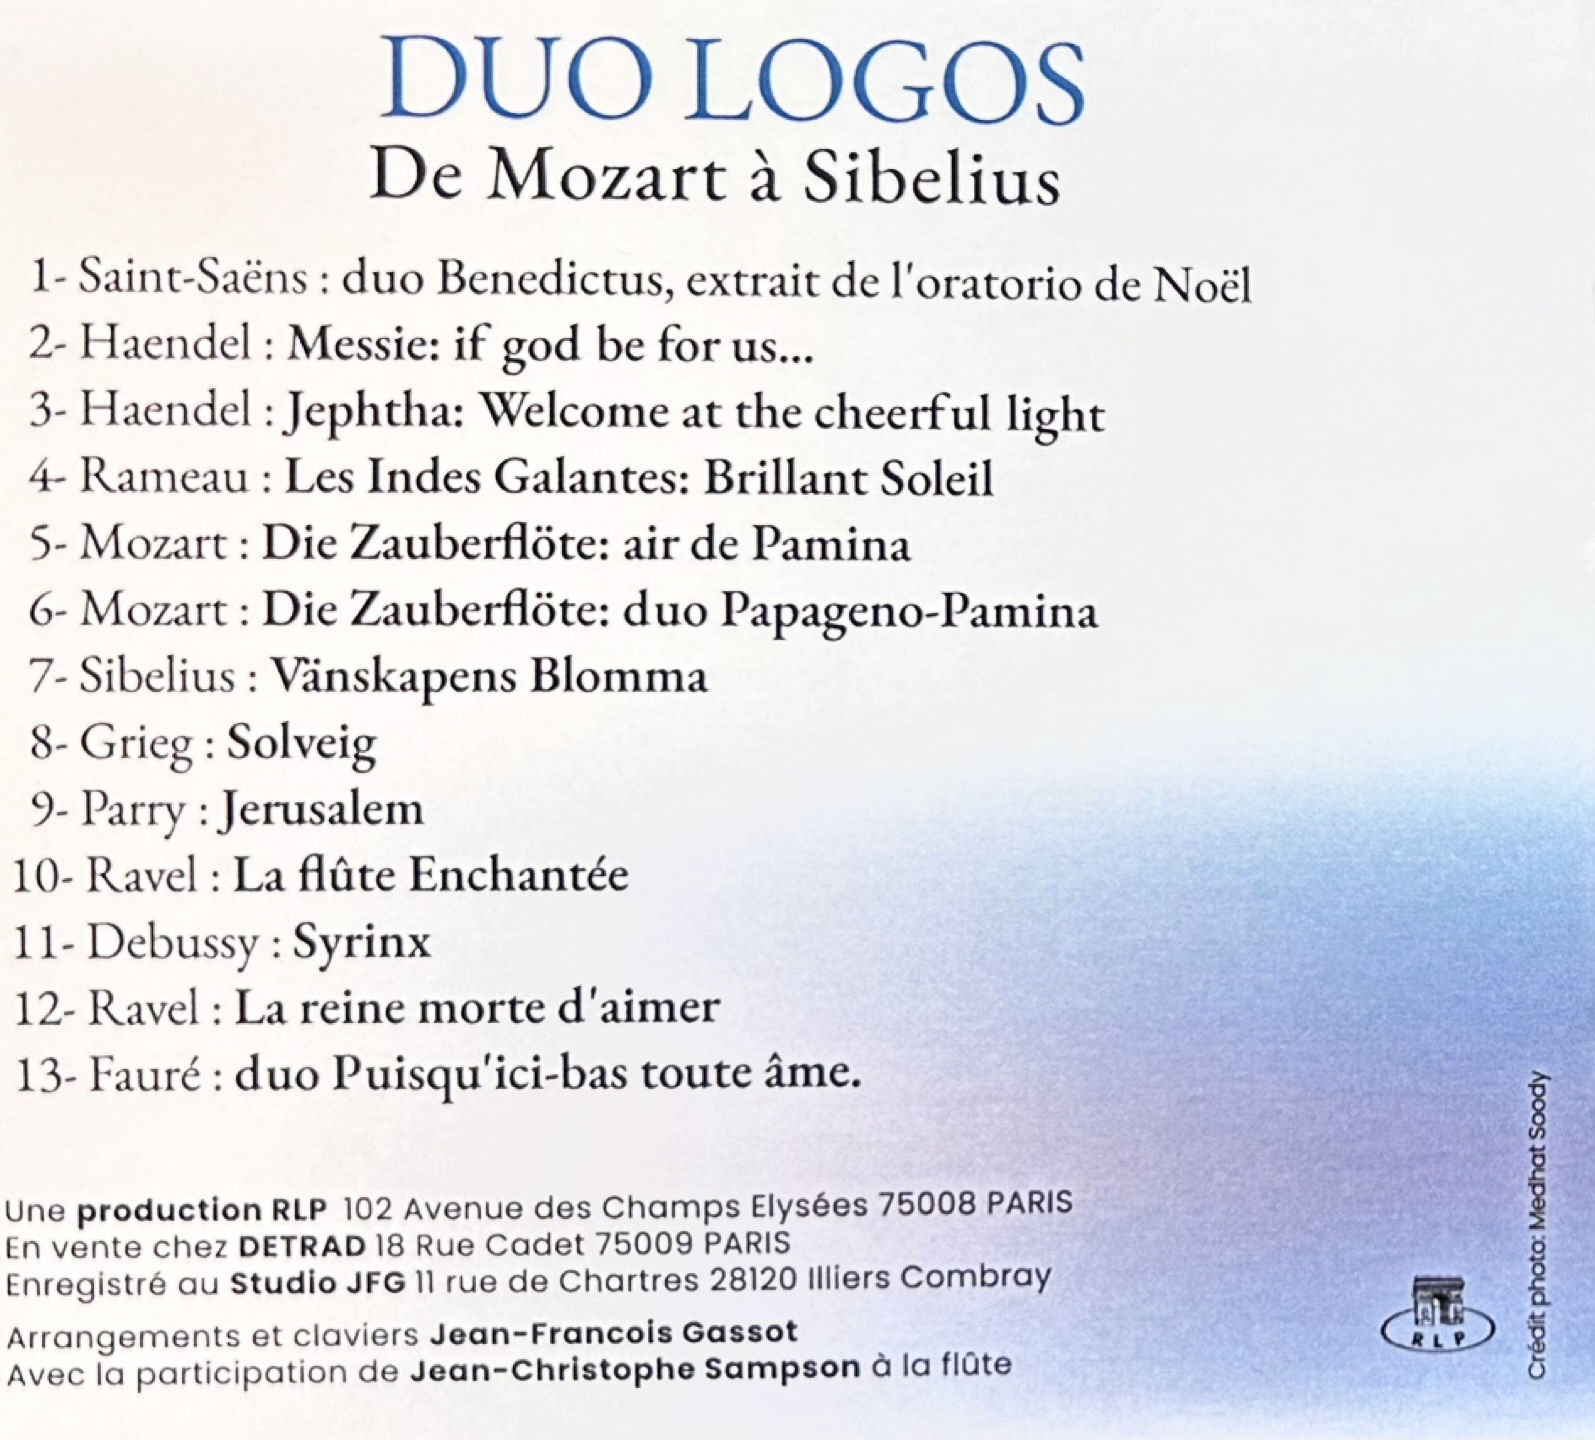 DUO_LOGOS_booklet_2